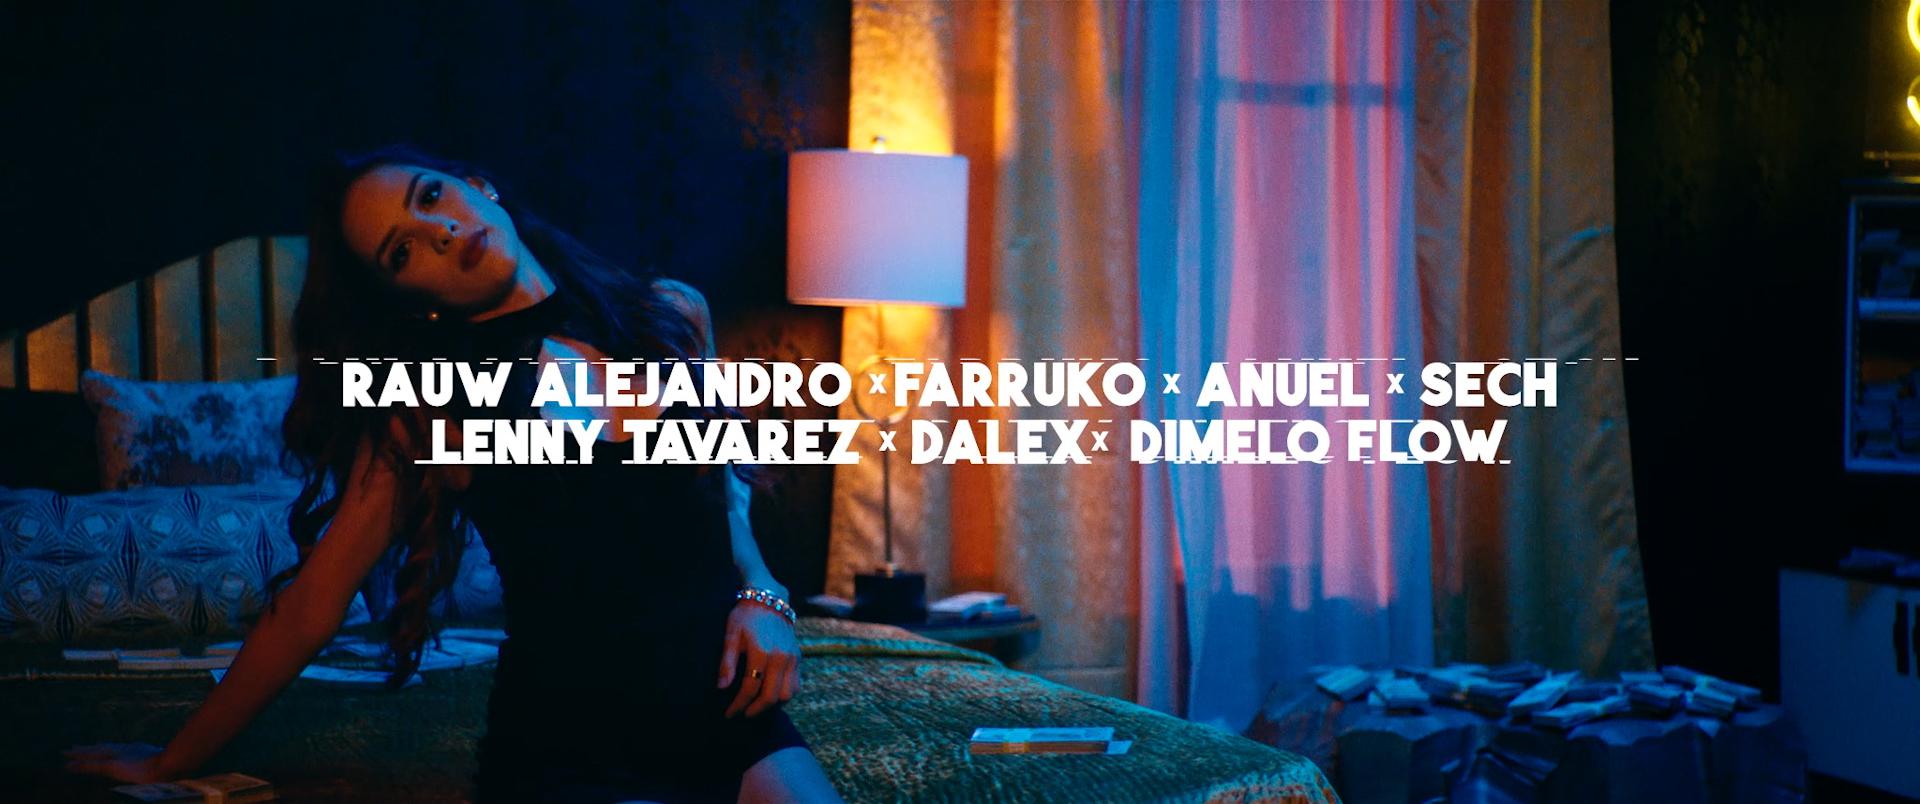 Rauw Alejandro - Elegí (Remix - Official Video)